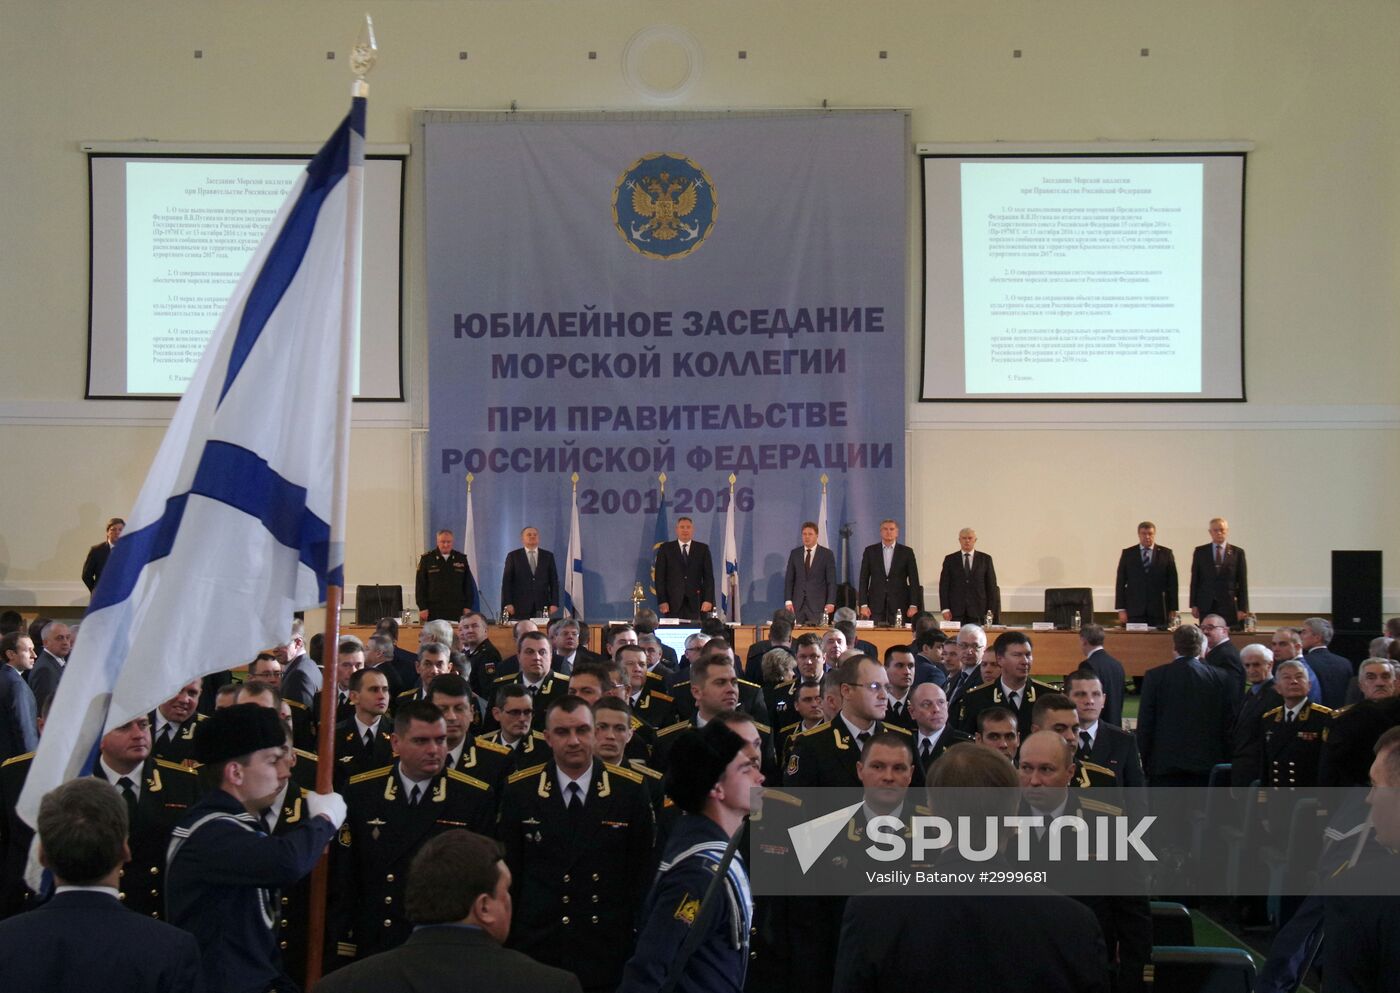 Government Marine Board meeting in Sevastopol